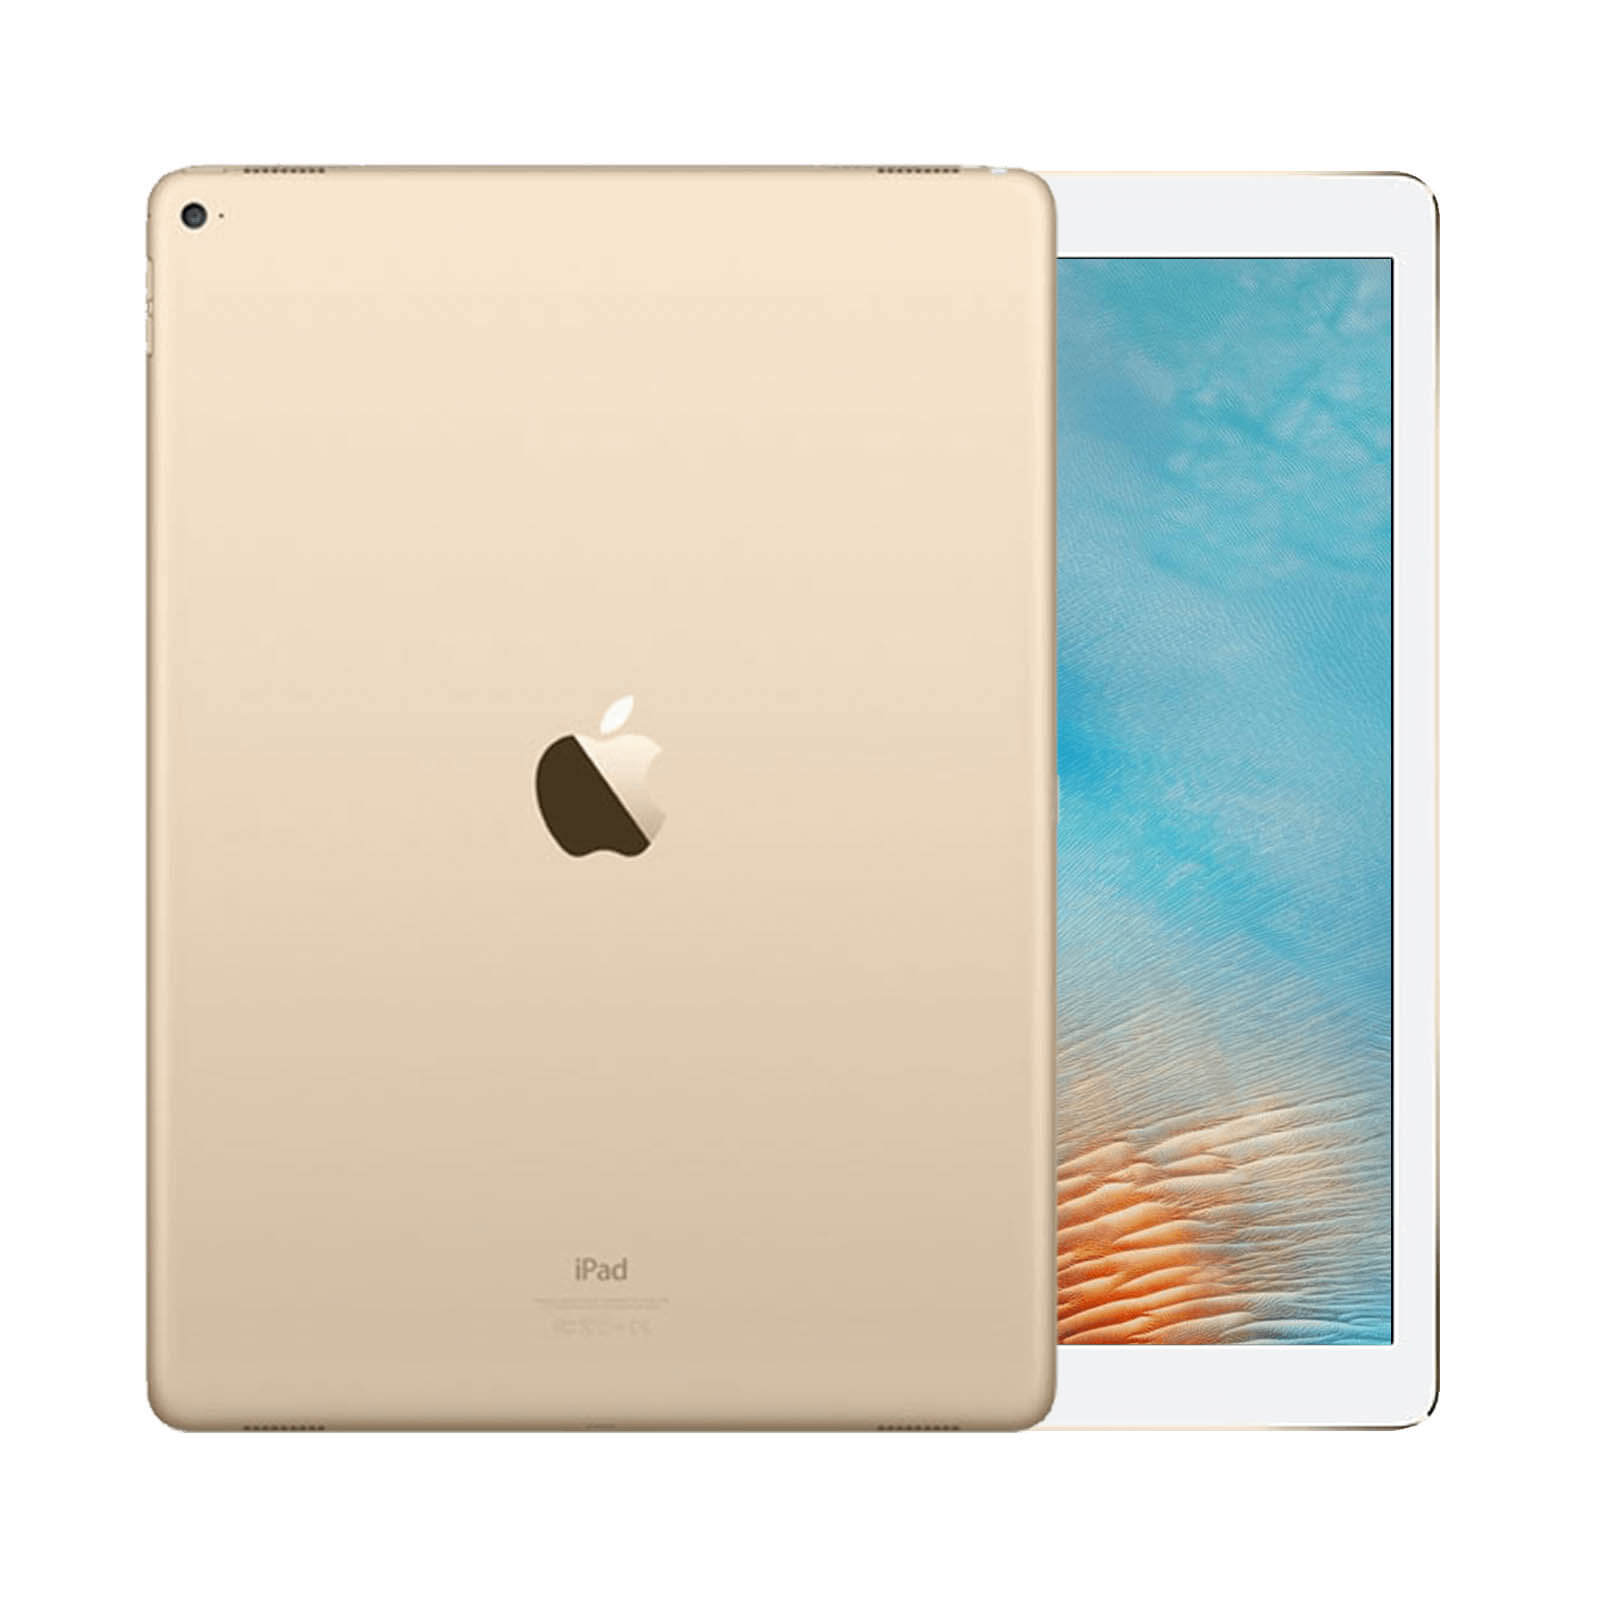 iPad Pro 12.9 Inch 2nd Gen 64GB Gold Good - WiFi